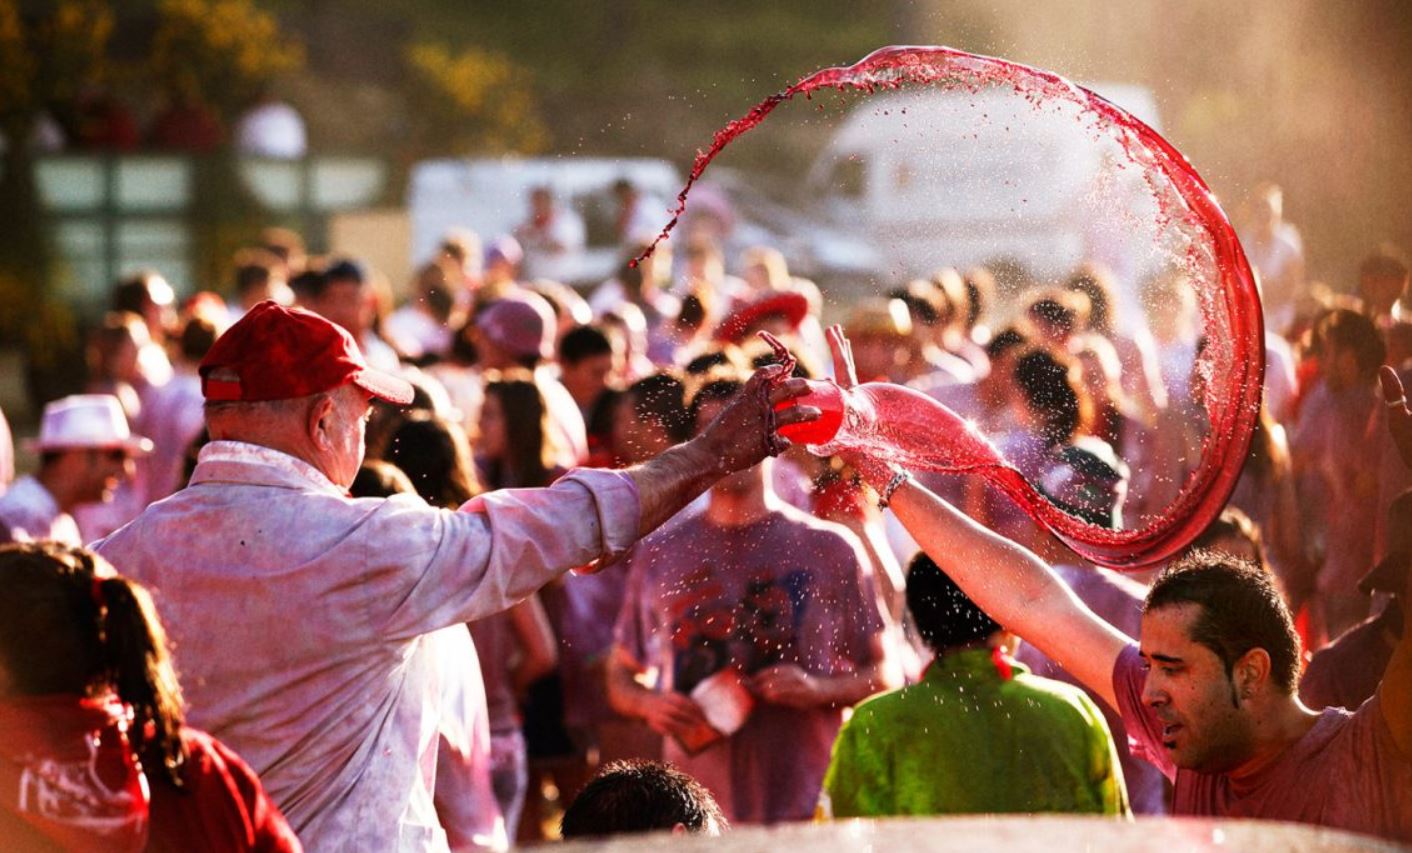 Attend the Wine Battle Festival